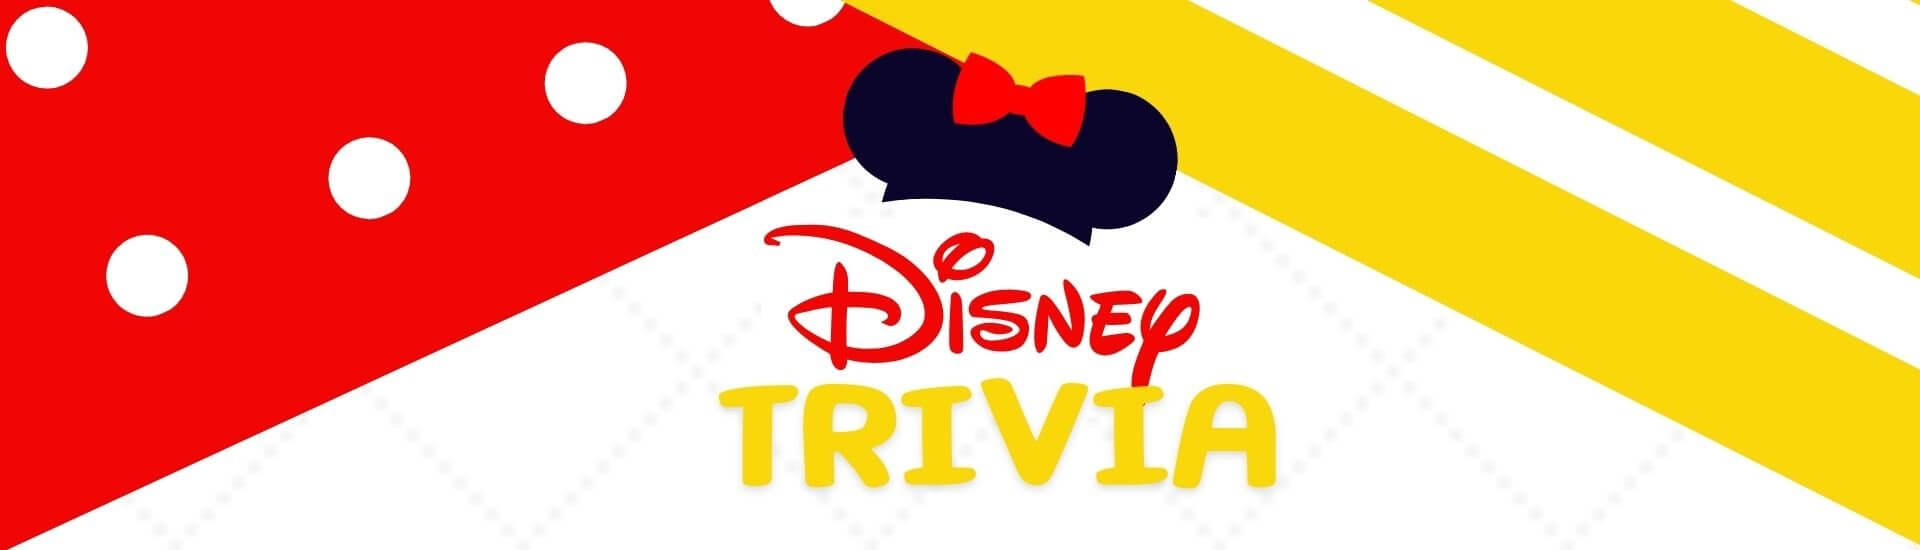 Virtual Disney Trivia - Where to Play Disney Trivia From Home